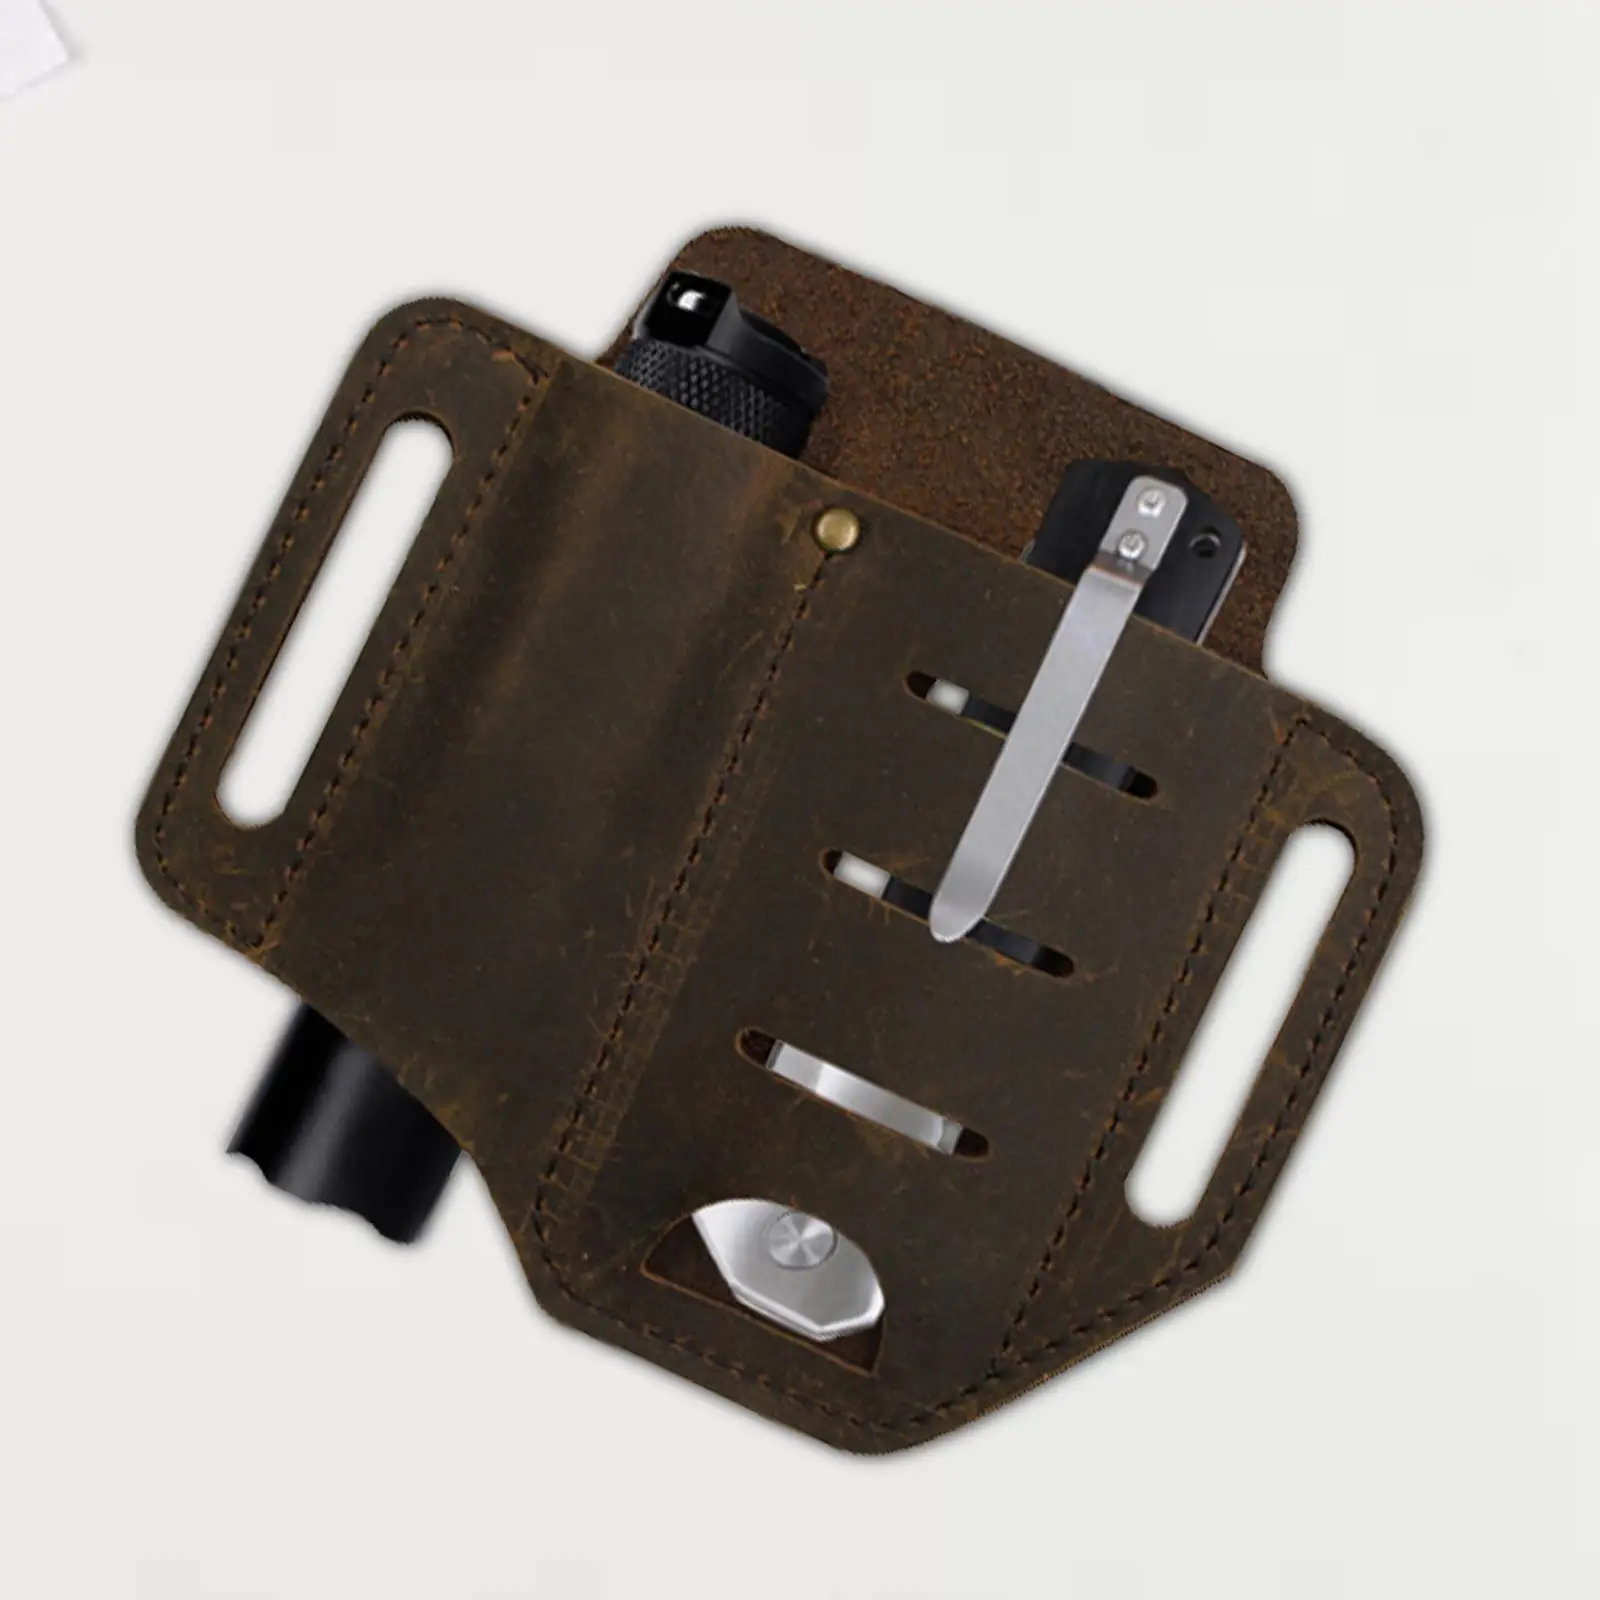 Waist Bag and Keychain Clip Flashlight Sheath Pocket Organizer Multitool Pouch for Daily Use Camping Flashlight Work Belt